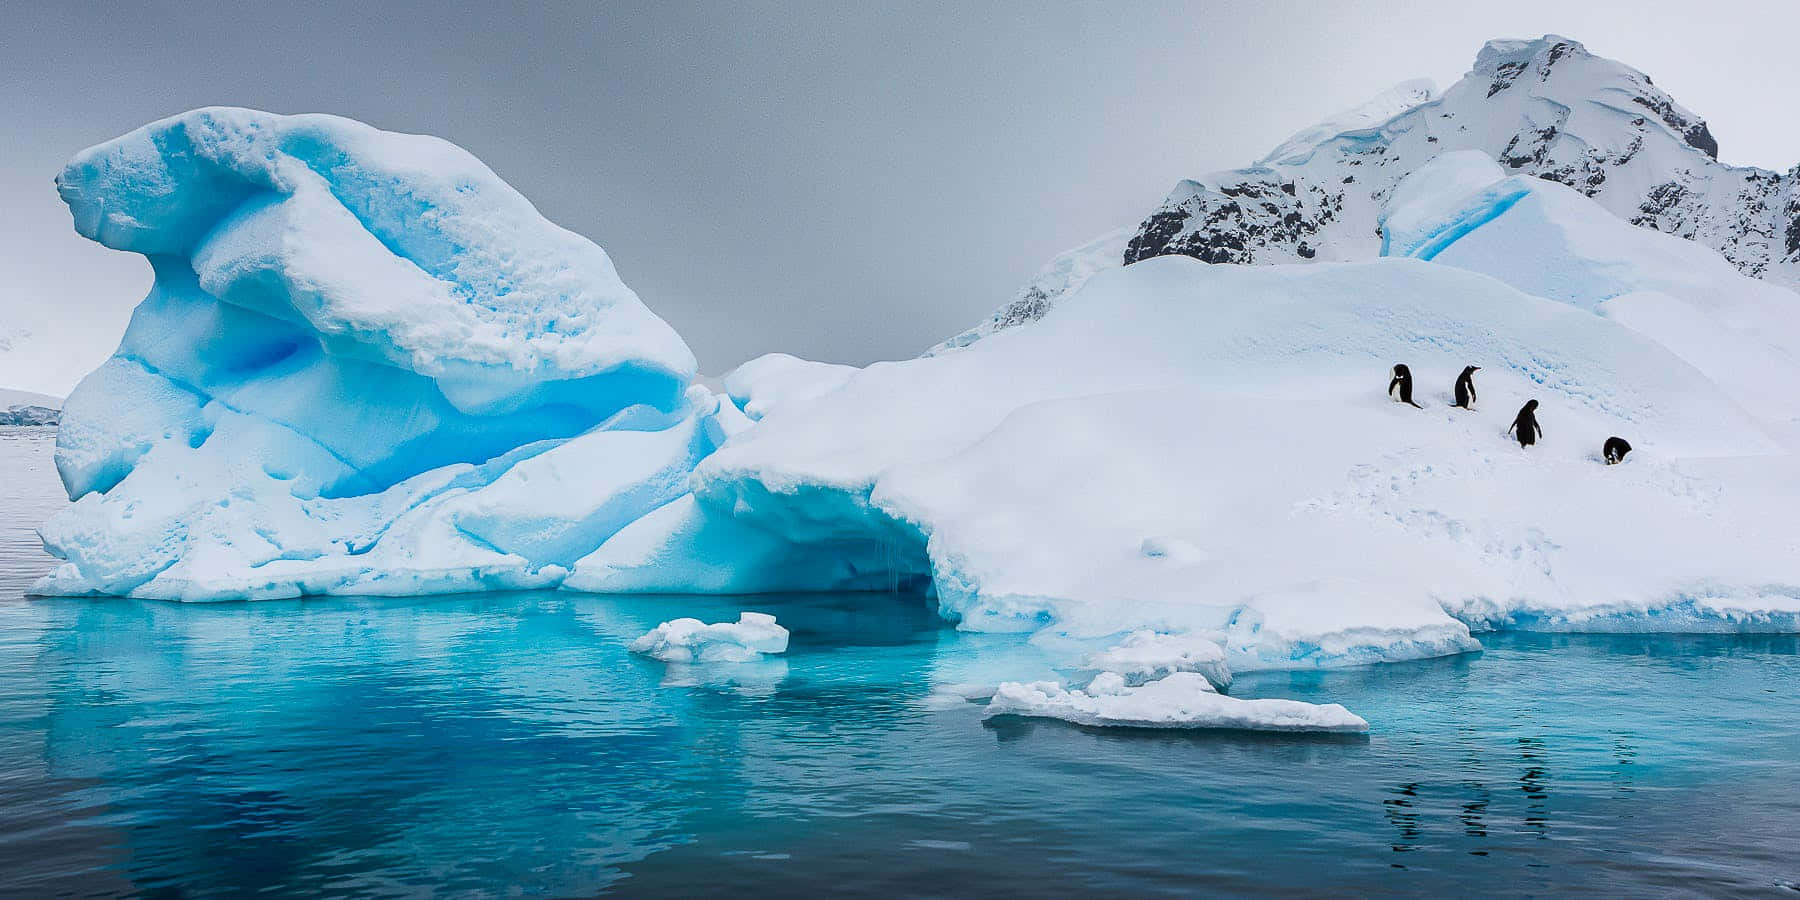 A Peaceful Winter Scene in Antarctica